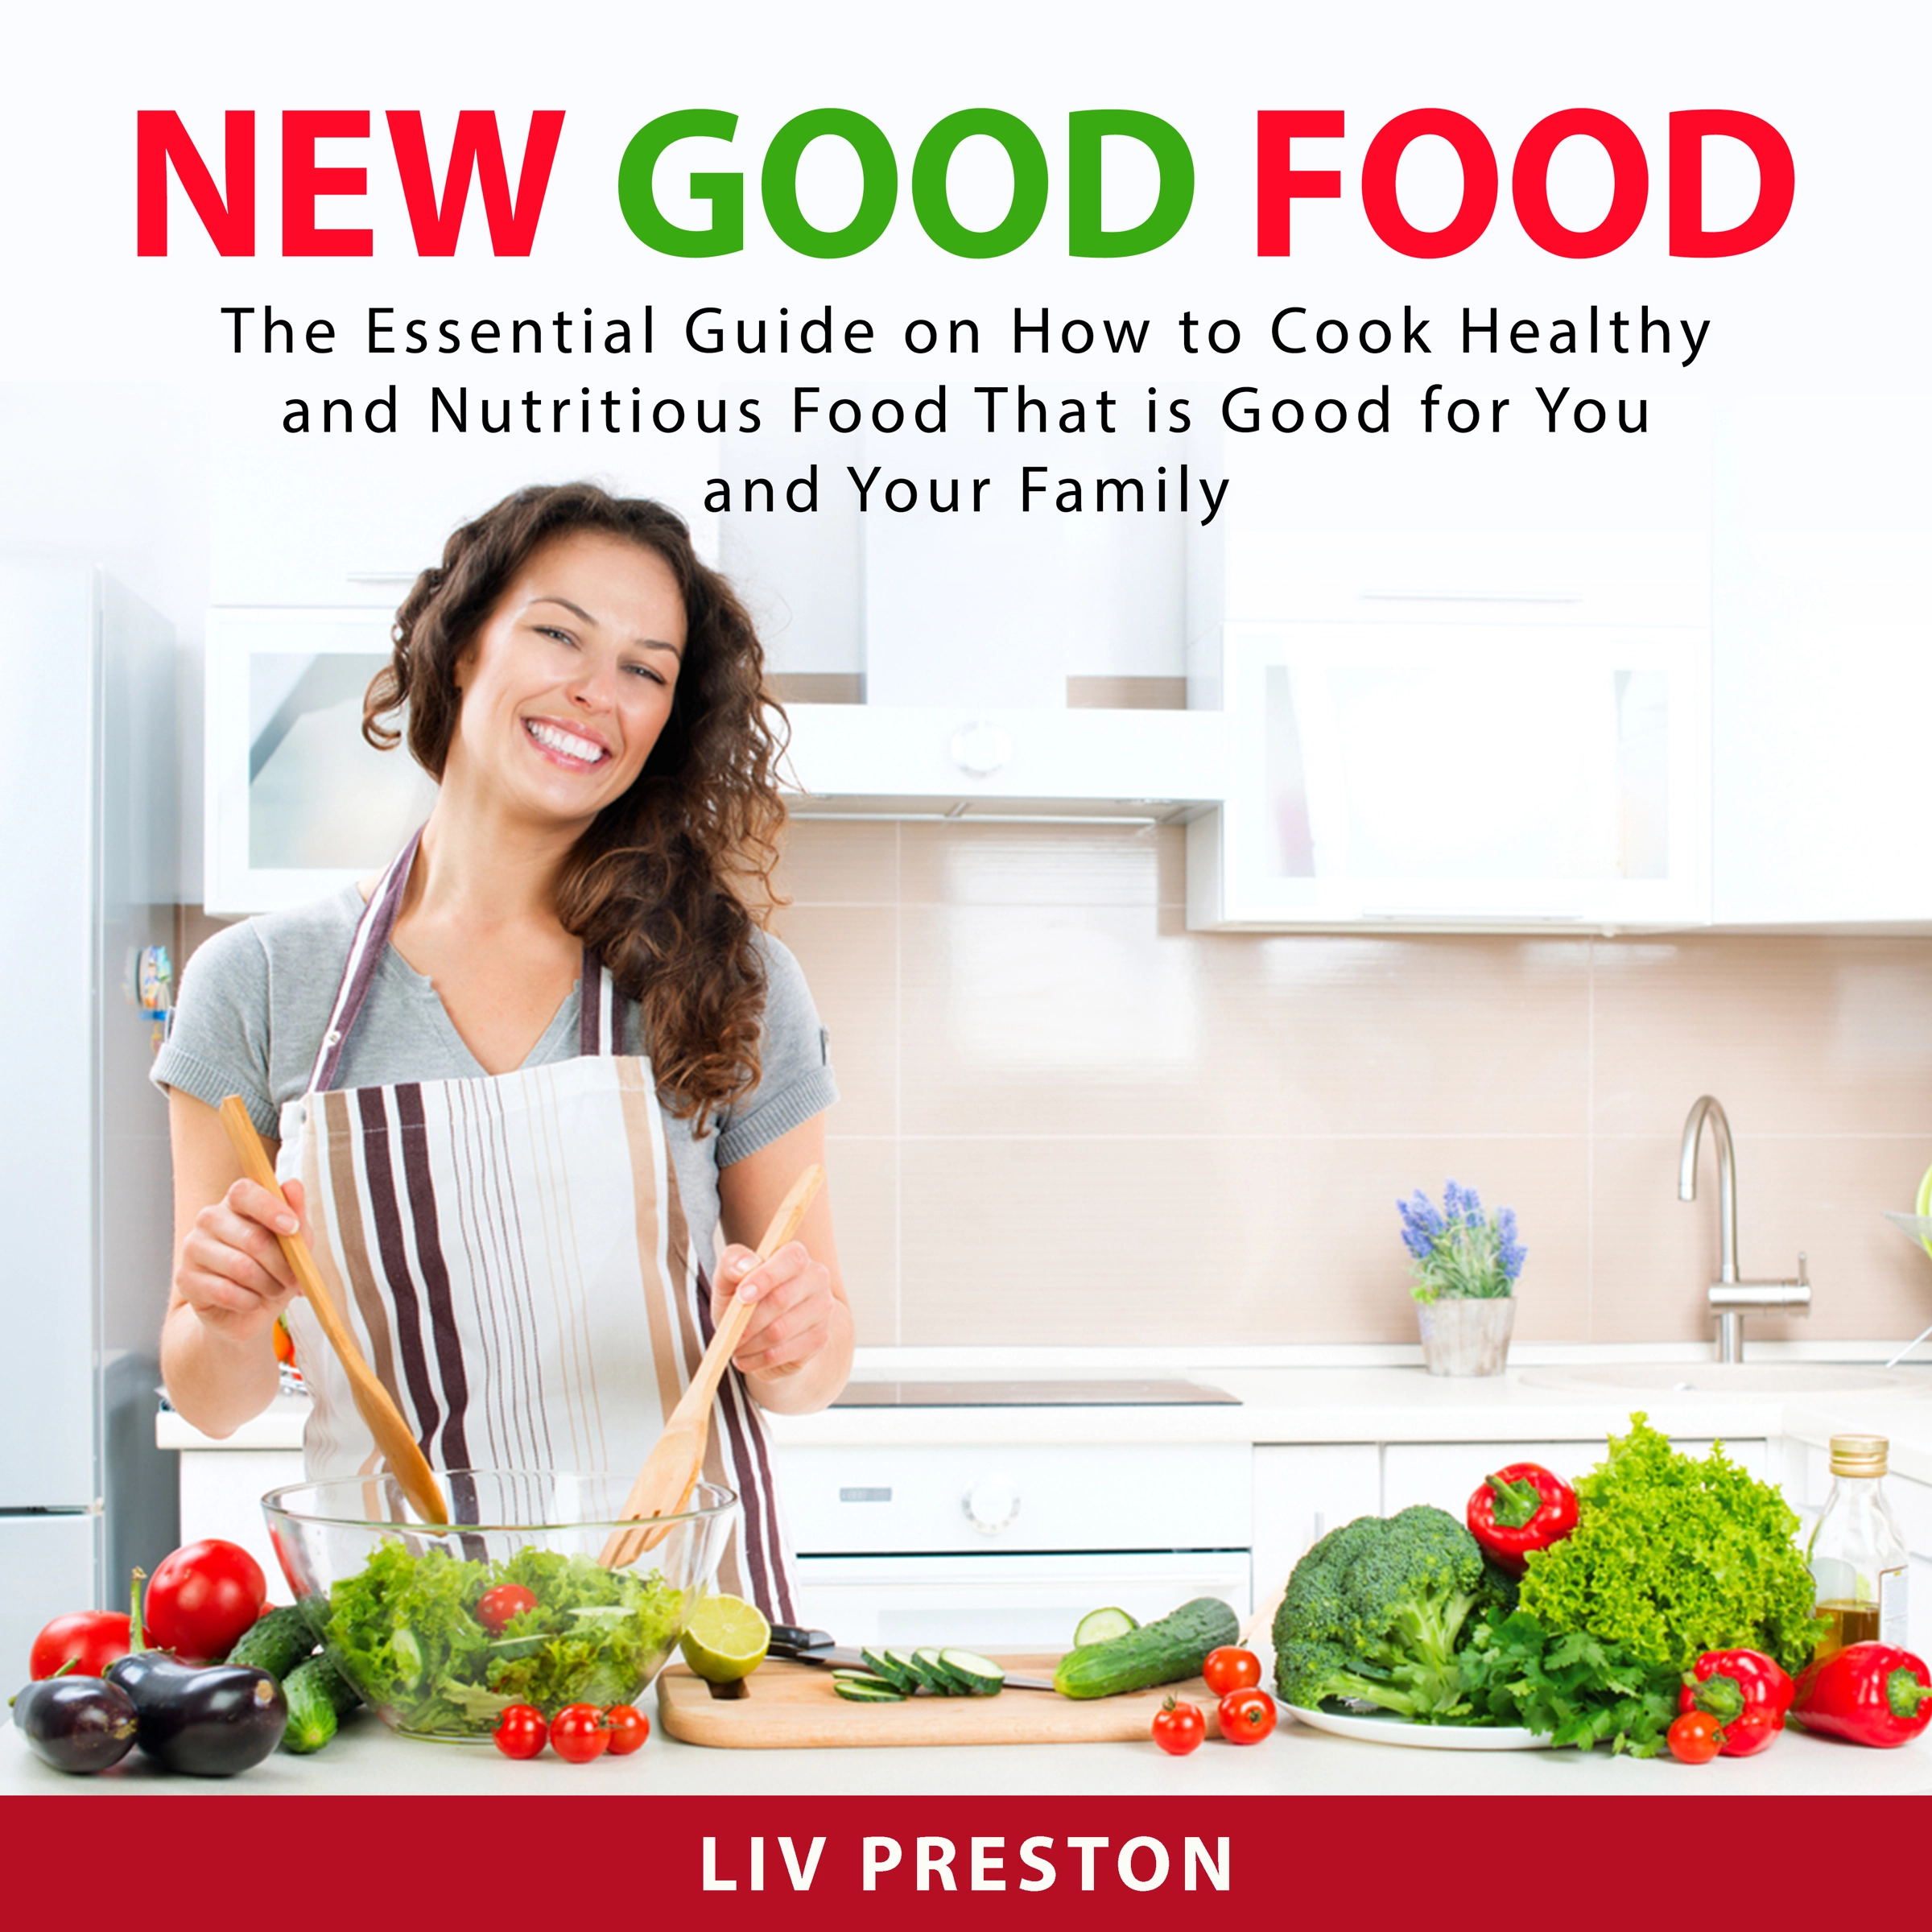 New Good Food Audiobook by Liv Preston